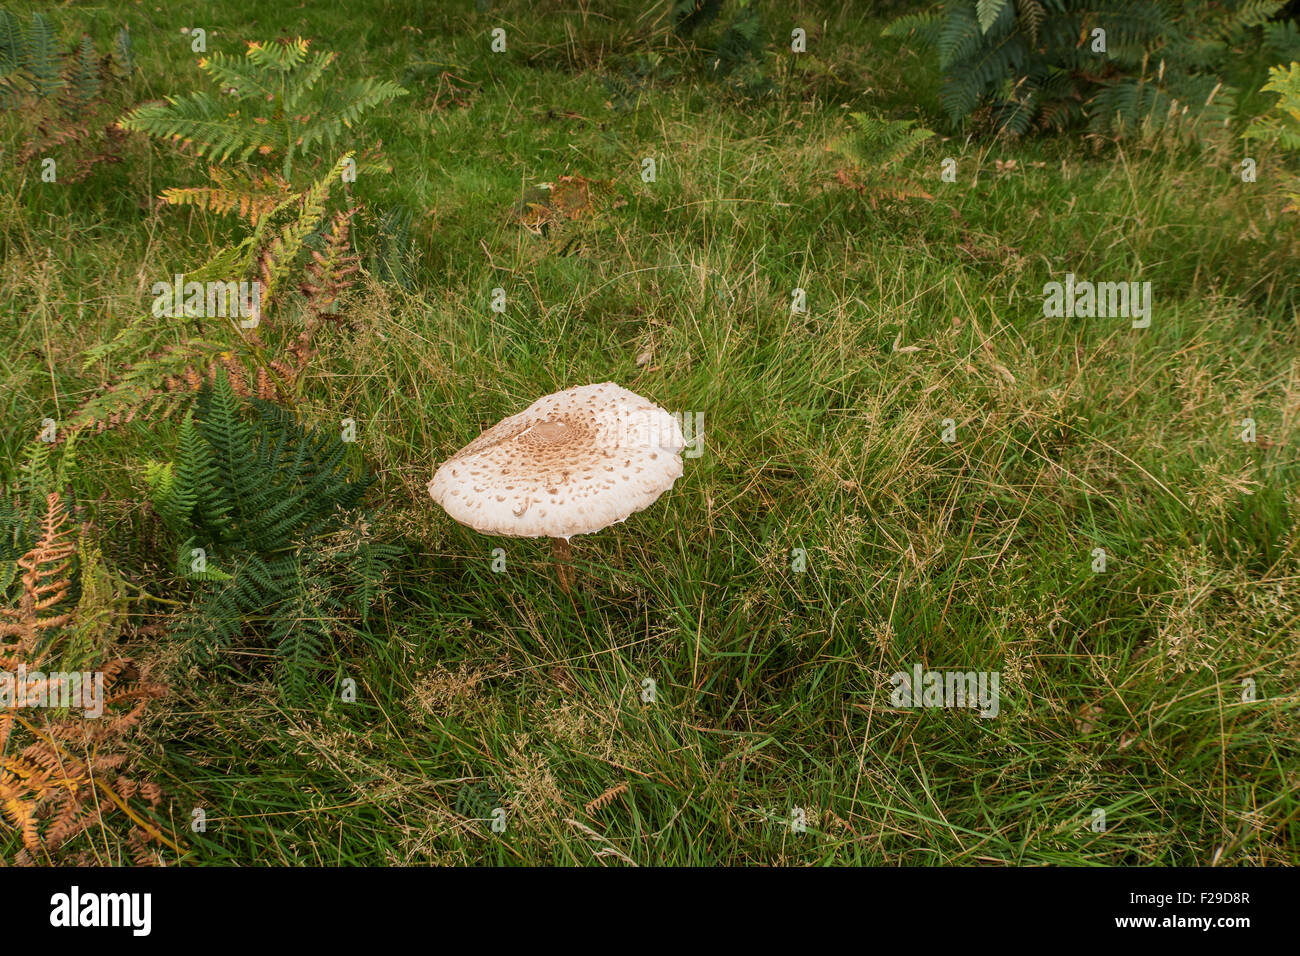 Lepiota procera also known as Common Shaggy Parasol mushroom Stock Photo